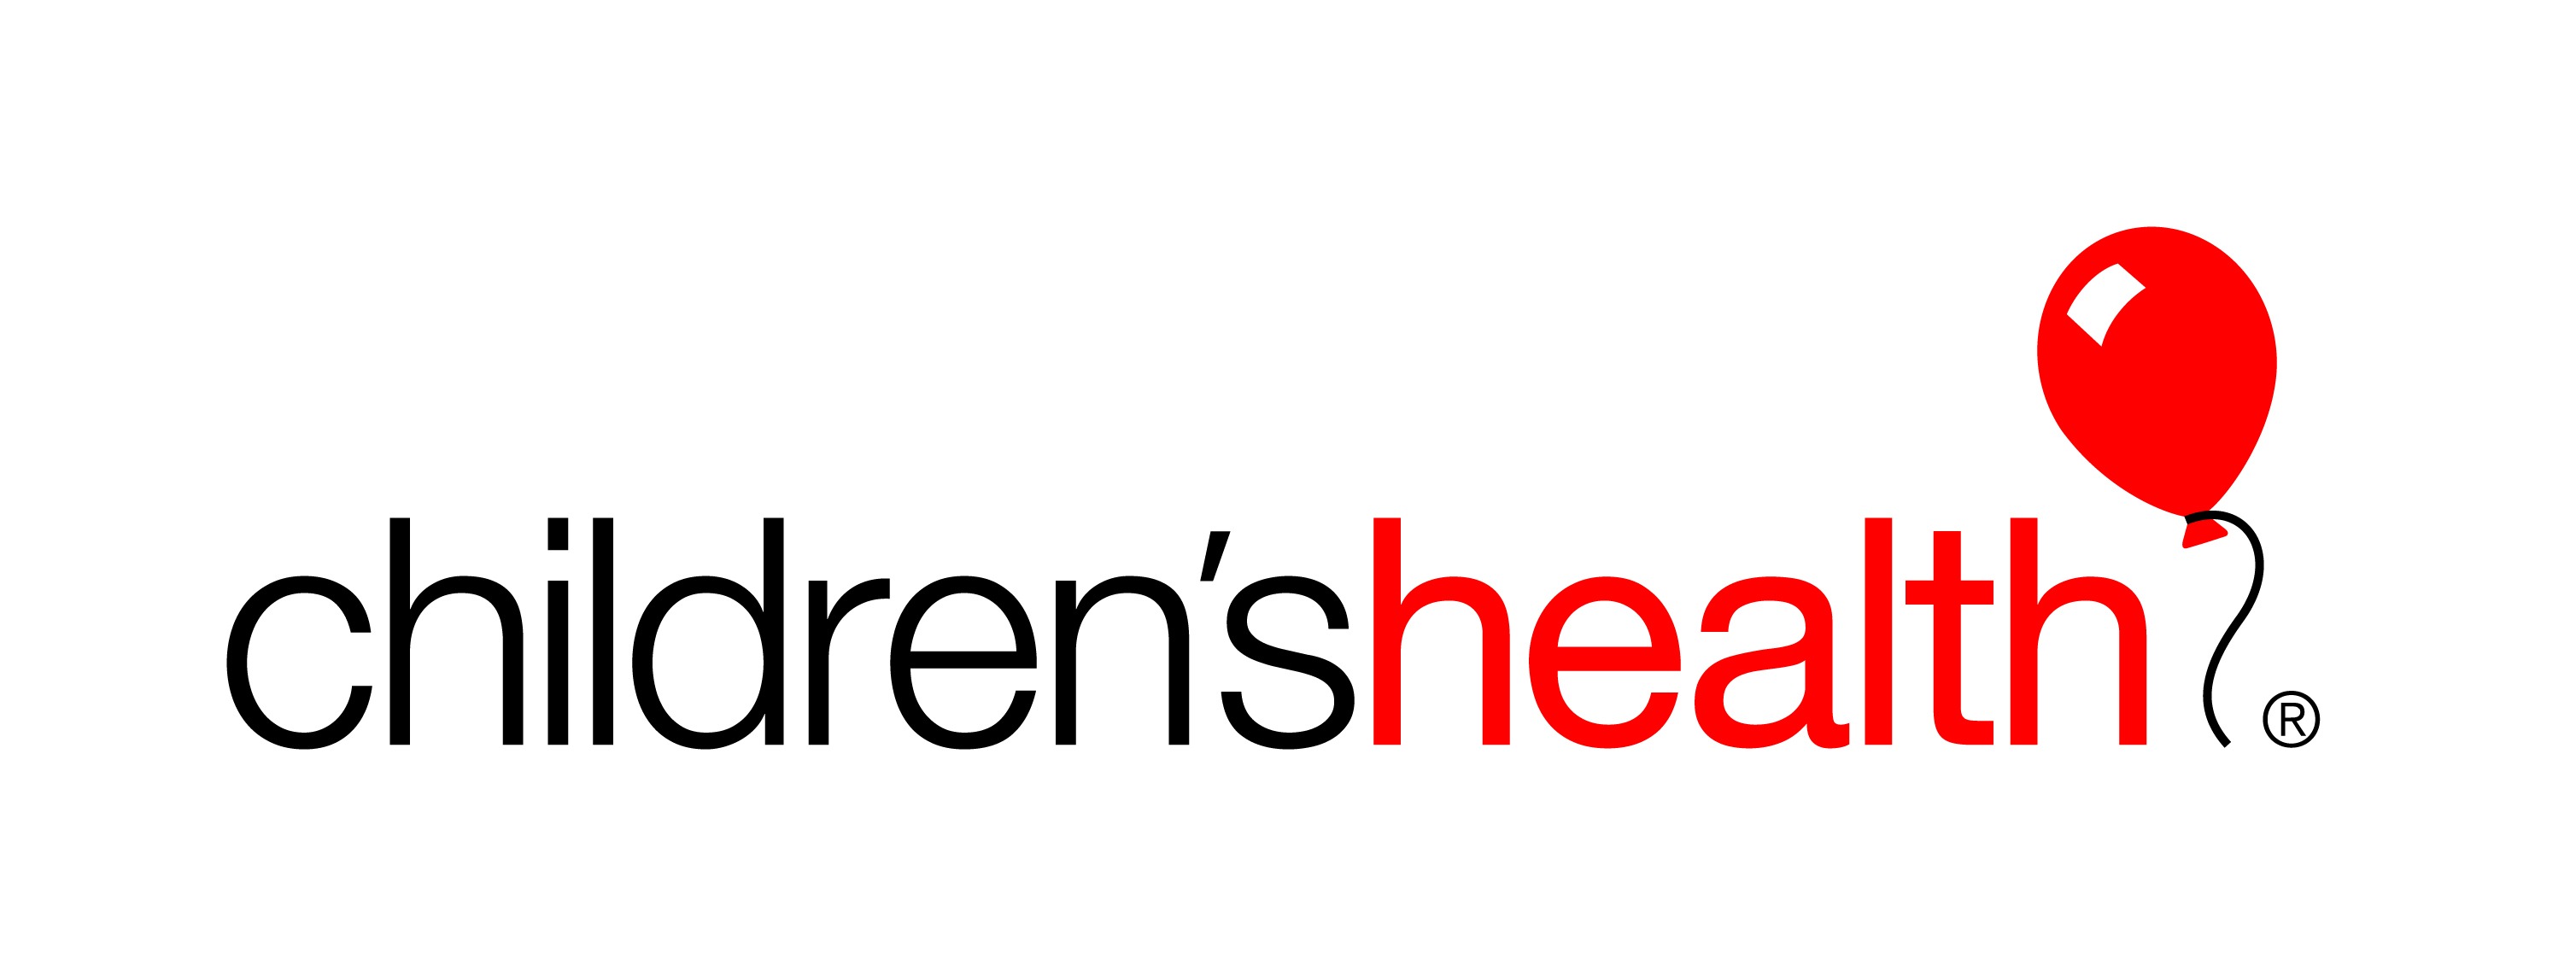 Children’s Health Creates Best-Performing Newsletter in Organization’s History - Logo - https://s39939.pcdn.co/wp-content/uploads/2019/09/Patient-Childrens.jpg